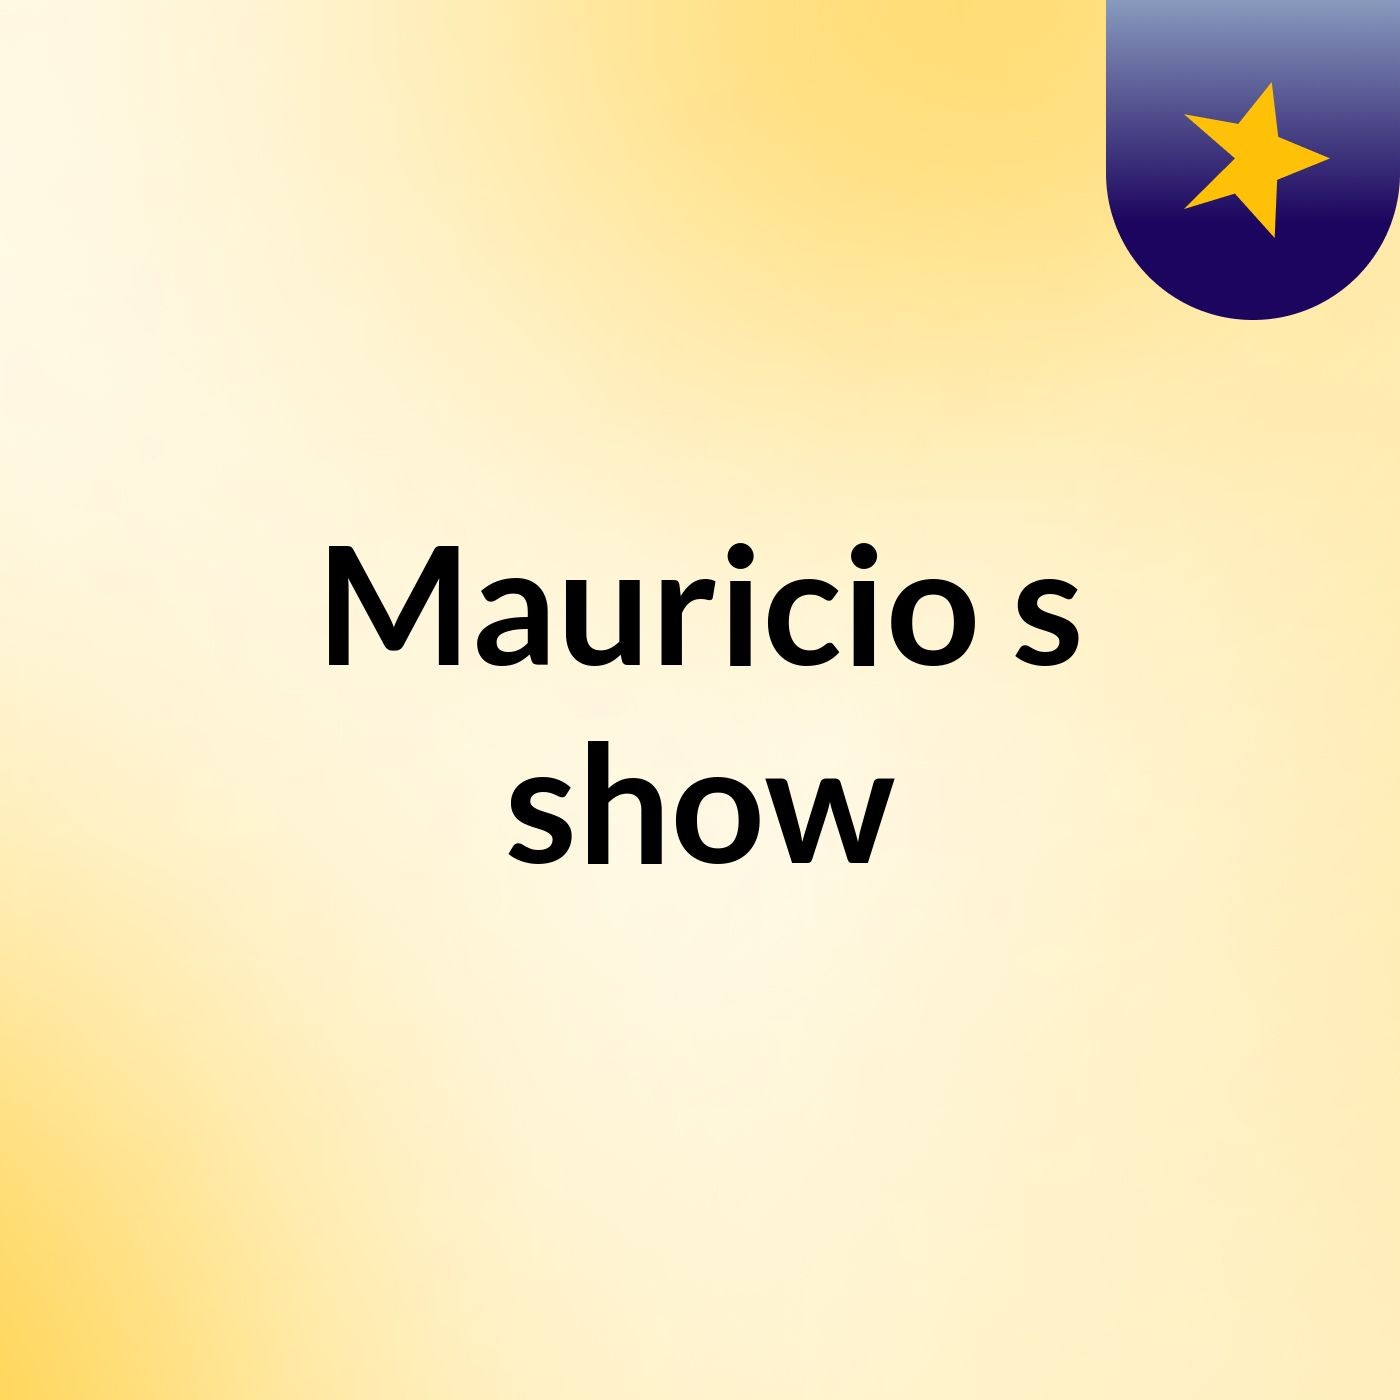 Mauricio's show